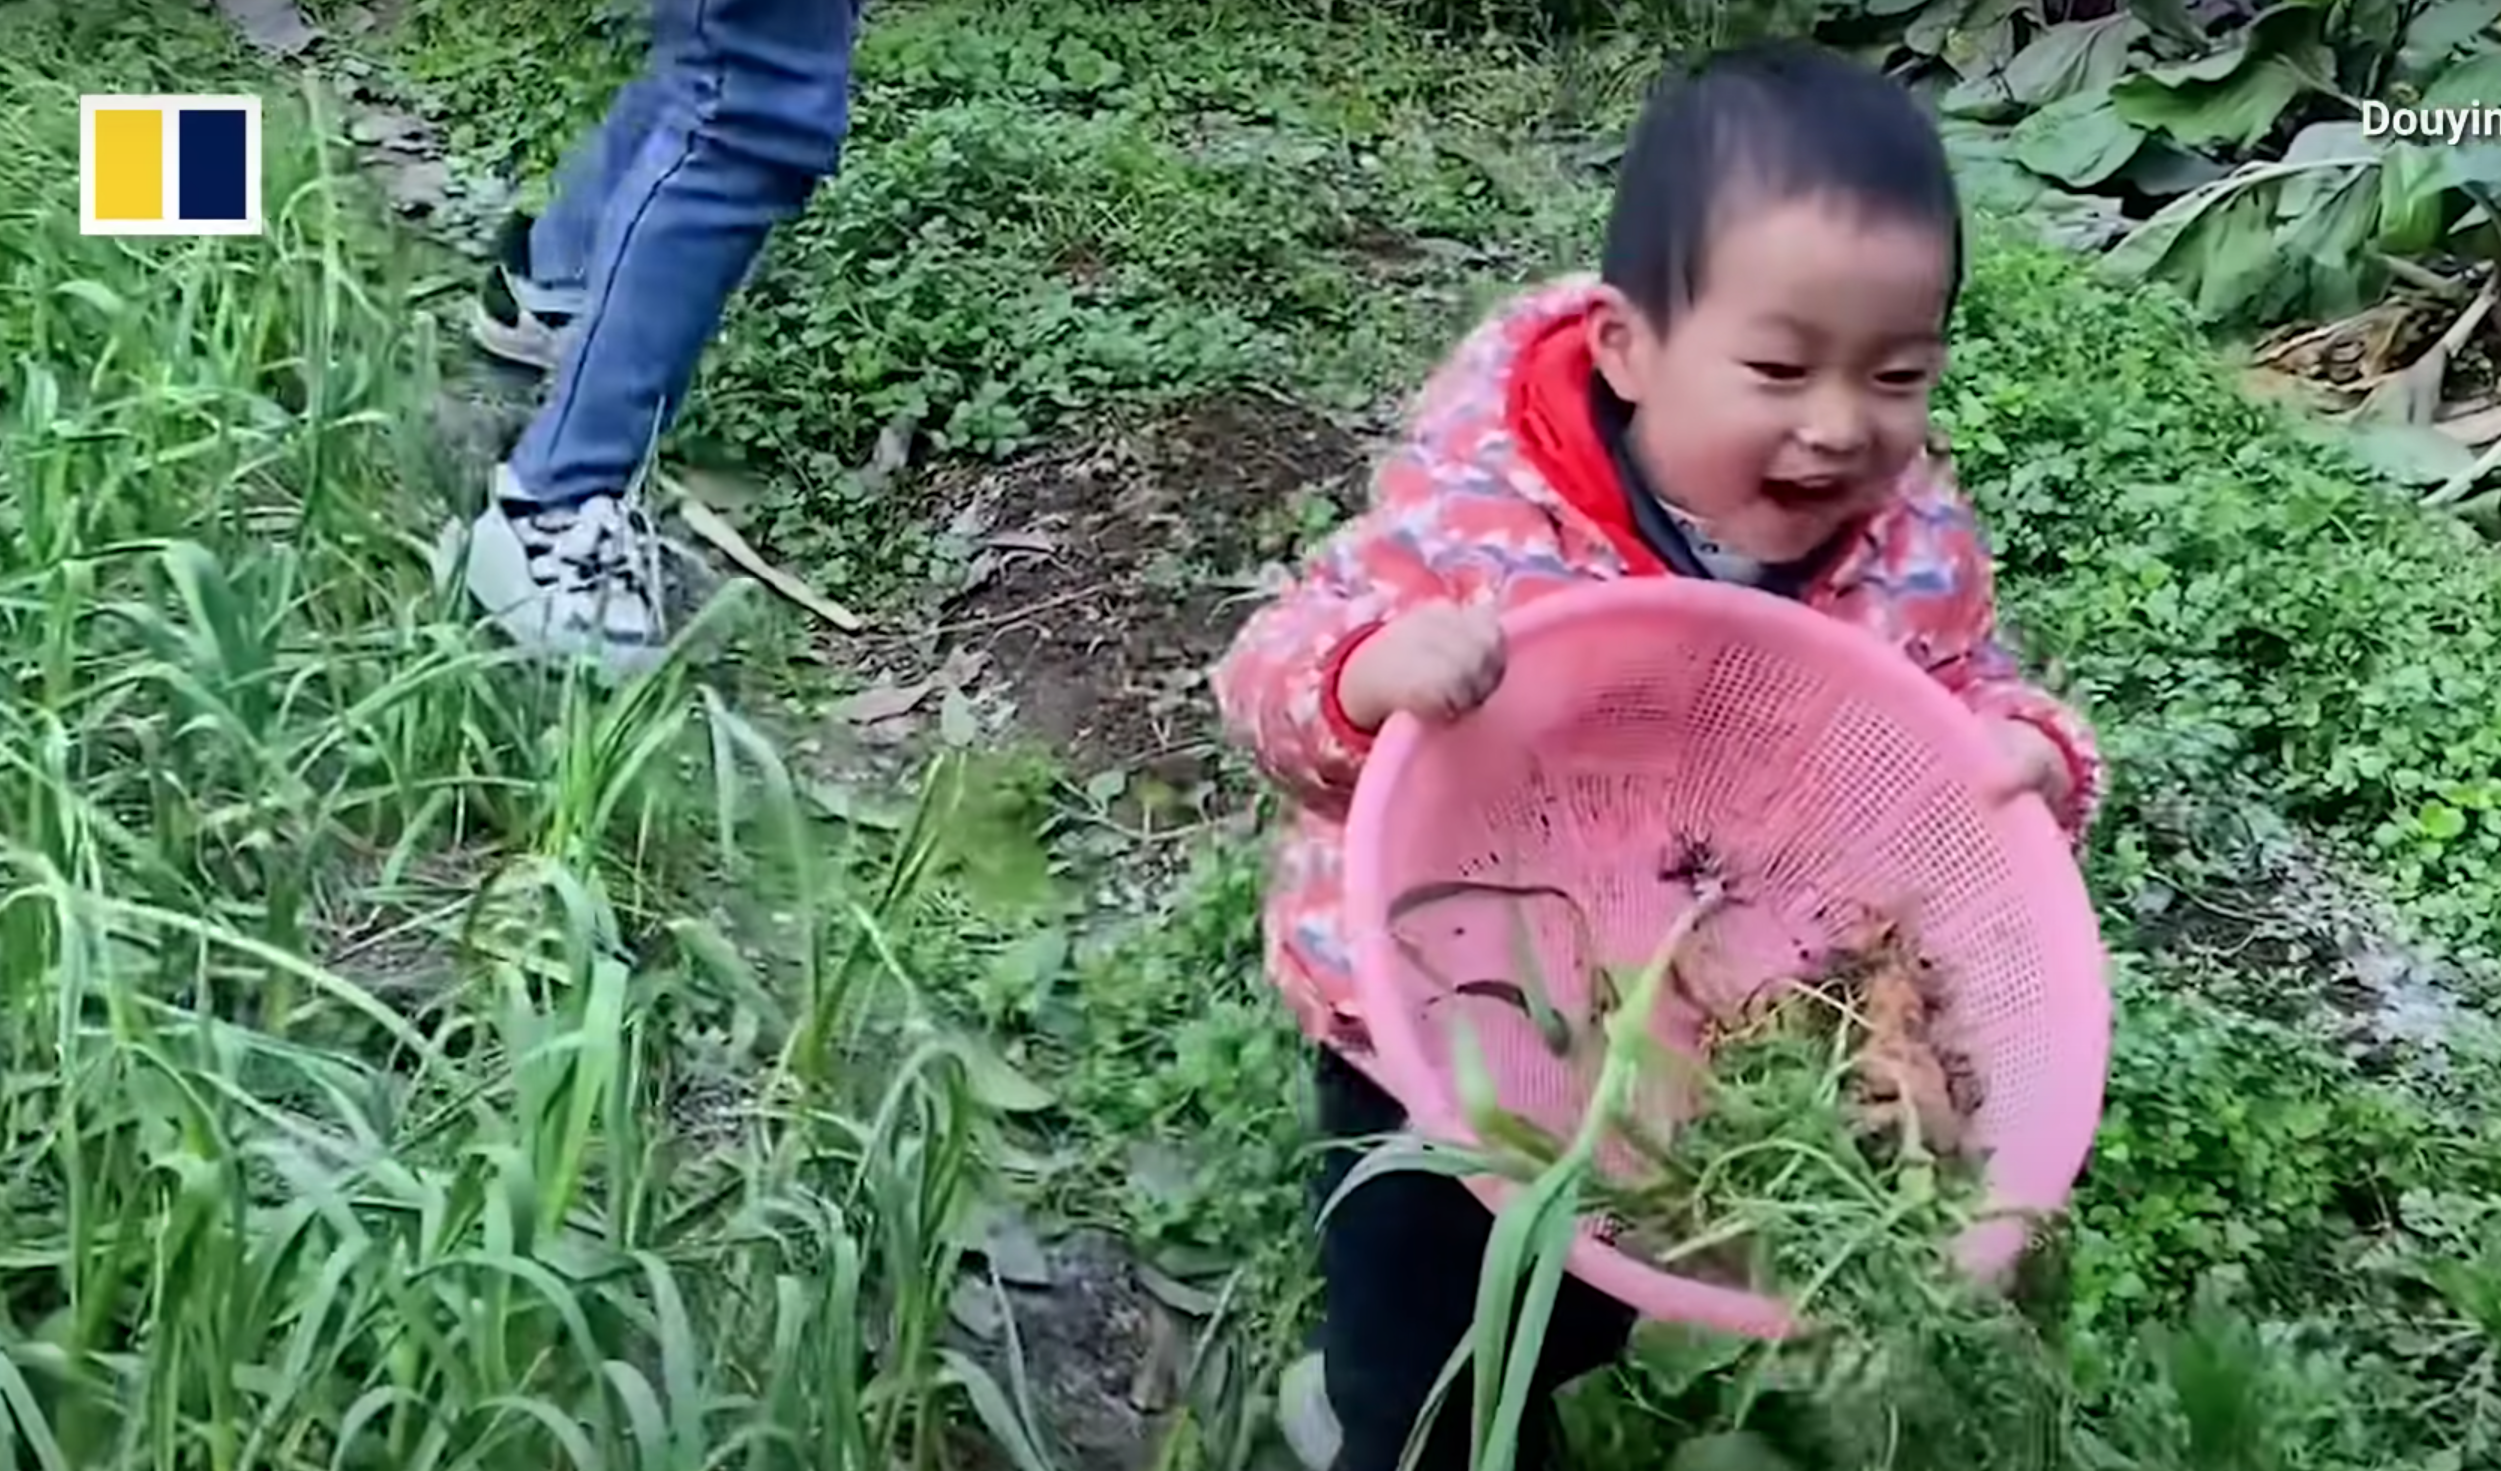 Pomelo aide sa mère à choisir les légumes. | Source : Youtube.com/South China Morning Post